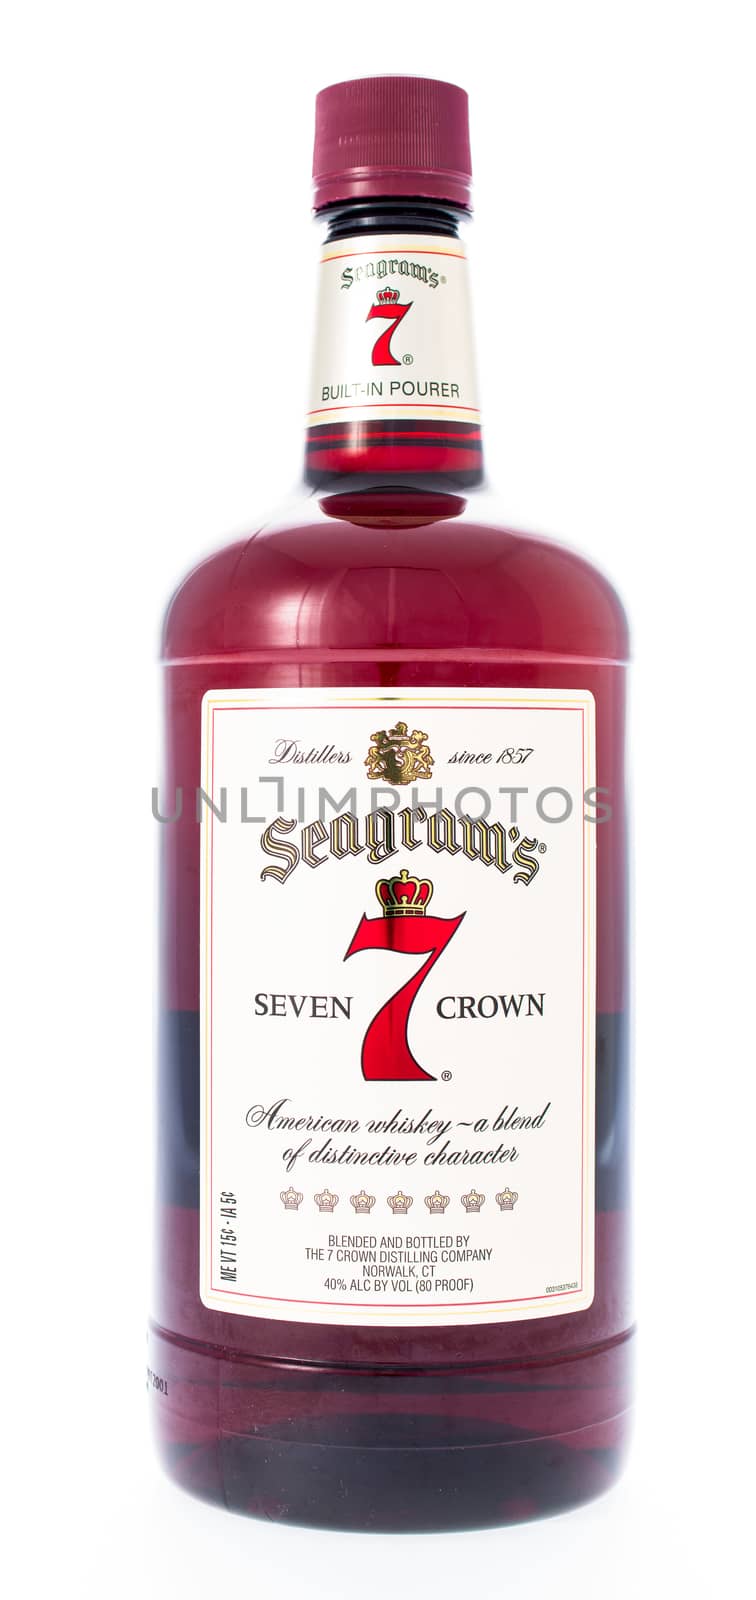 Seven Crown by homank76